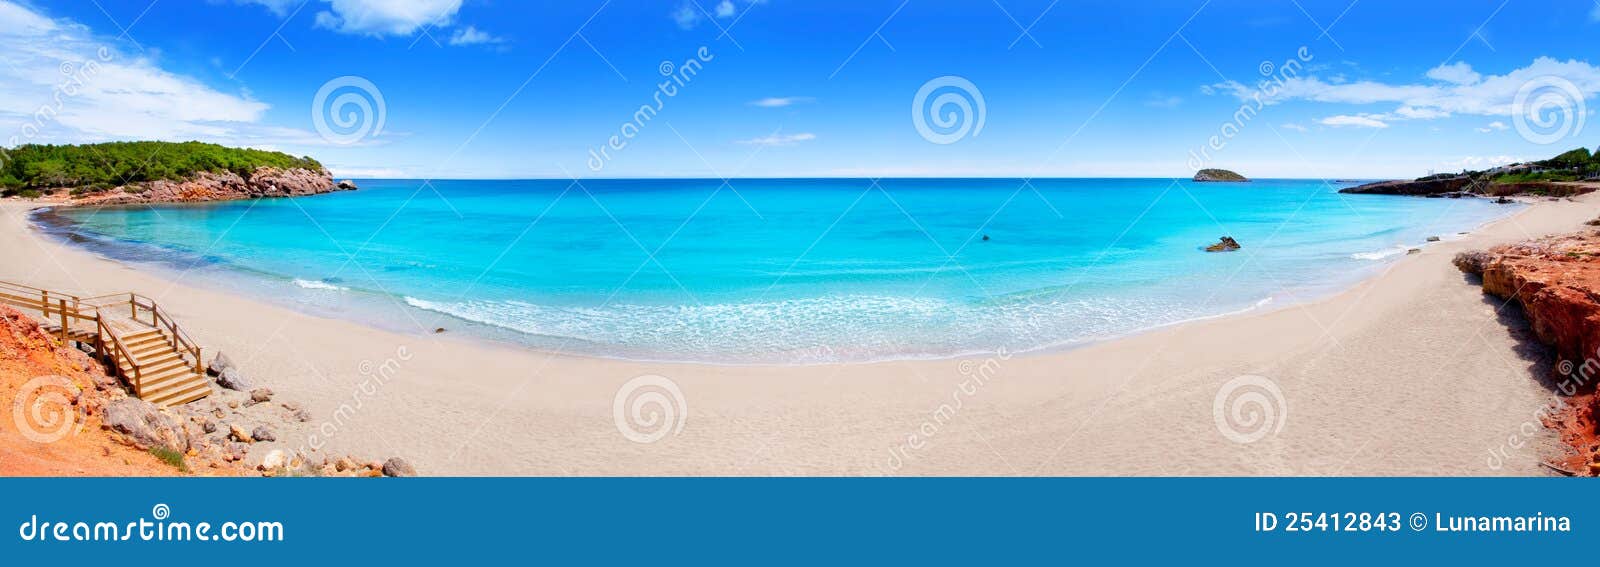 beach in ibiza island panoramic